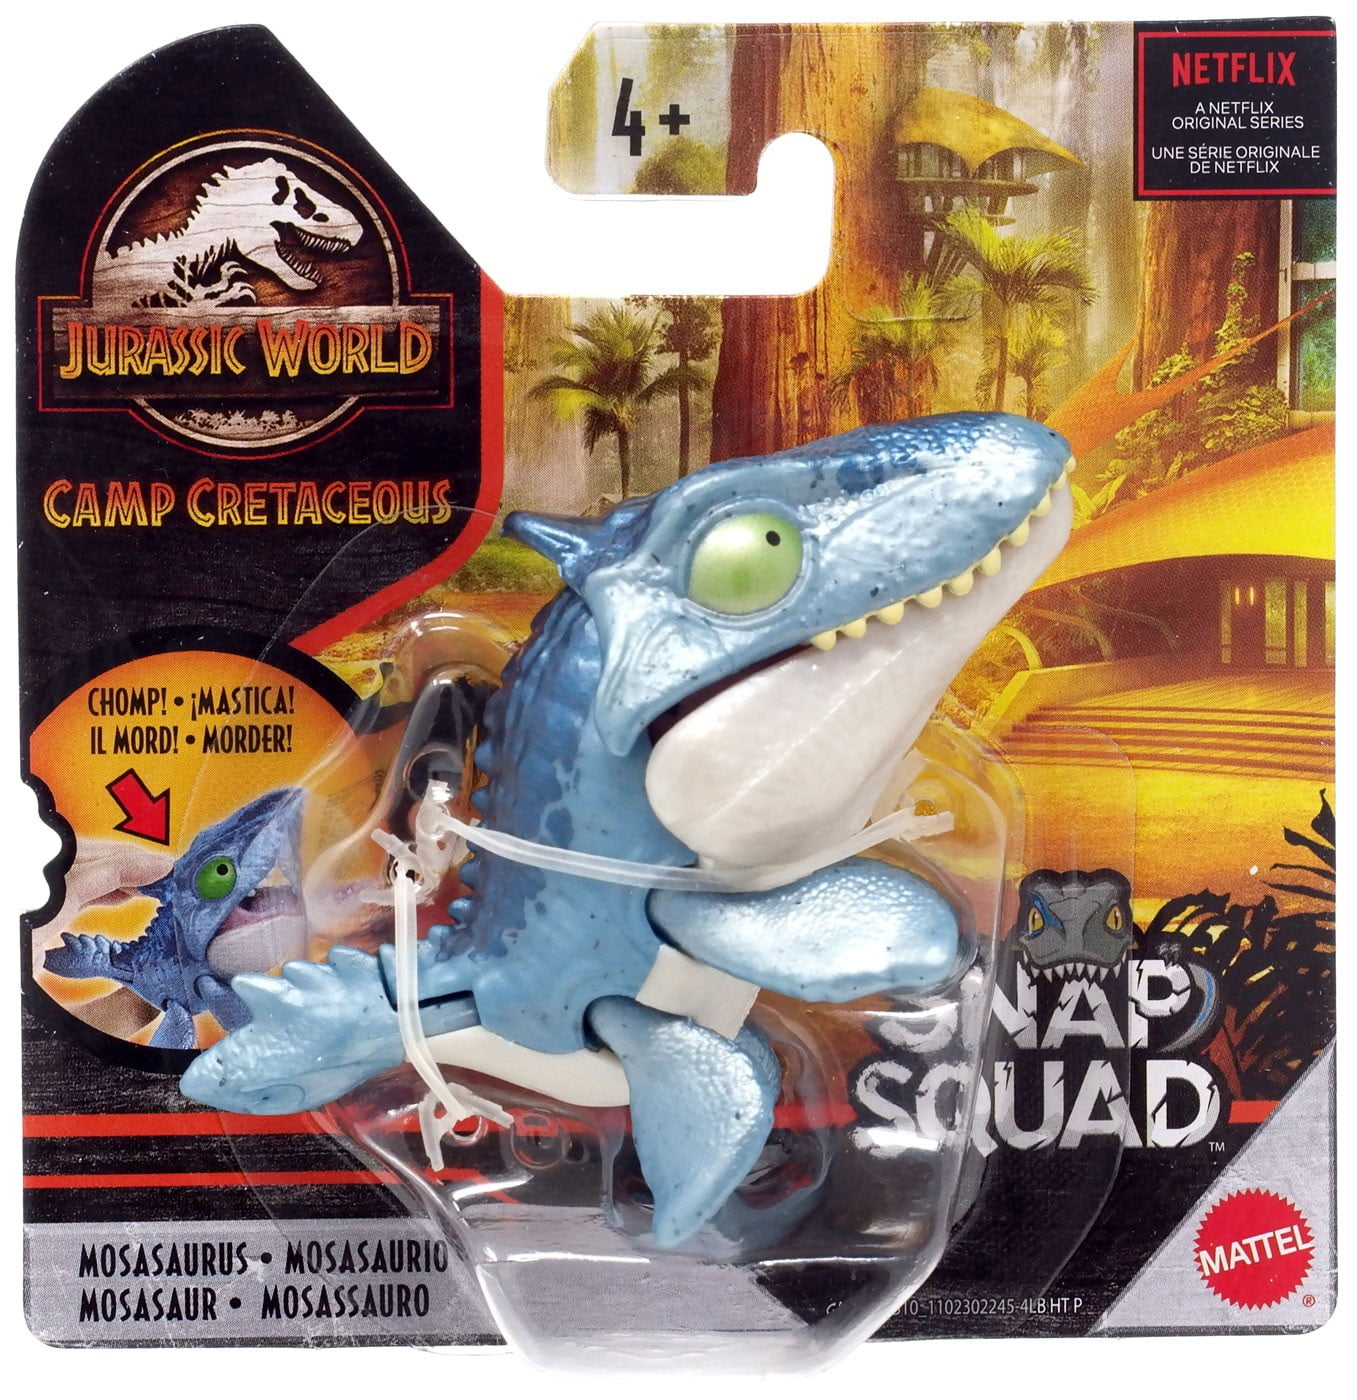 Jurassic World Snap Squad Wave 2 set of 4 Pcs Figure 